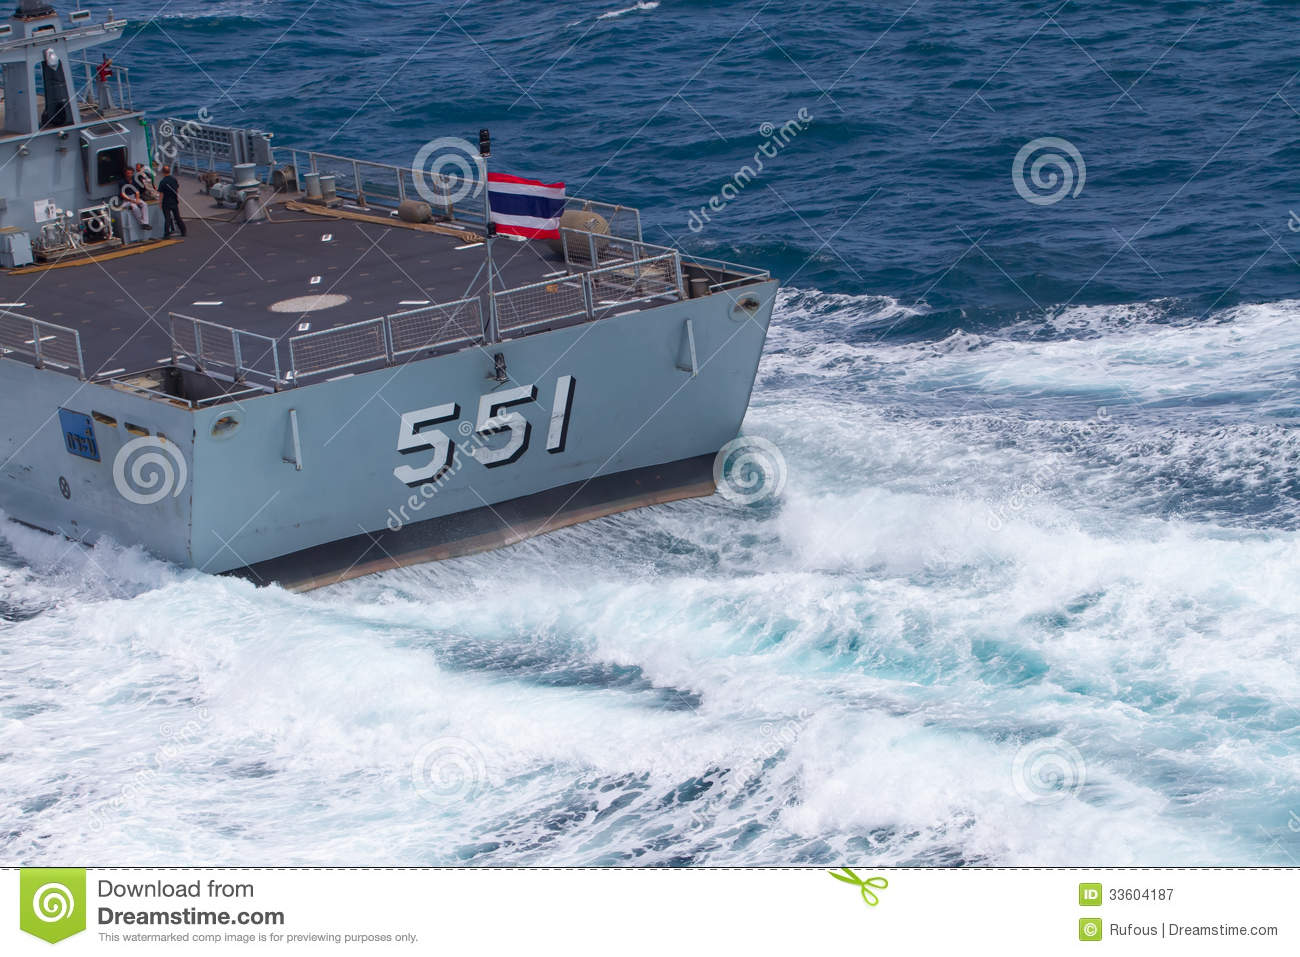 sattaheep-thailand-june-h-t-m-s-krabi-offshore-patro-patrol-vessel-royal-thai-navy-test-control-system-speed-test-33604187.jpg